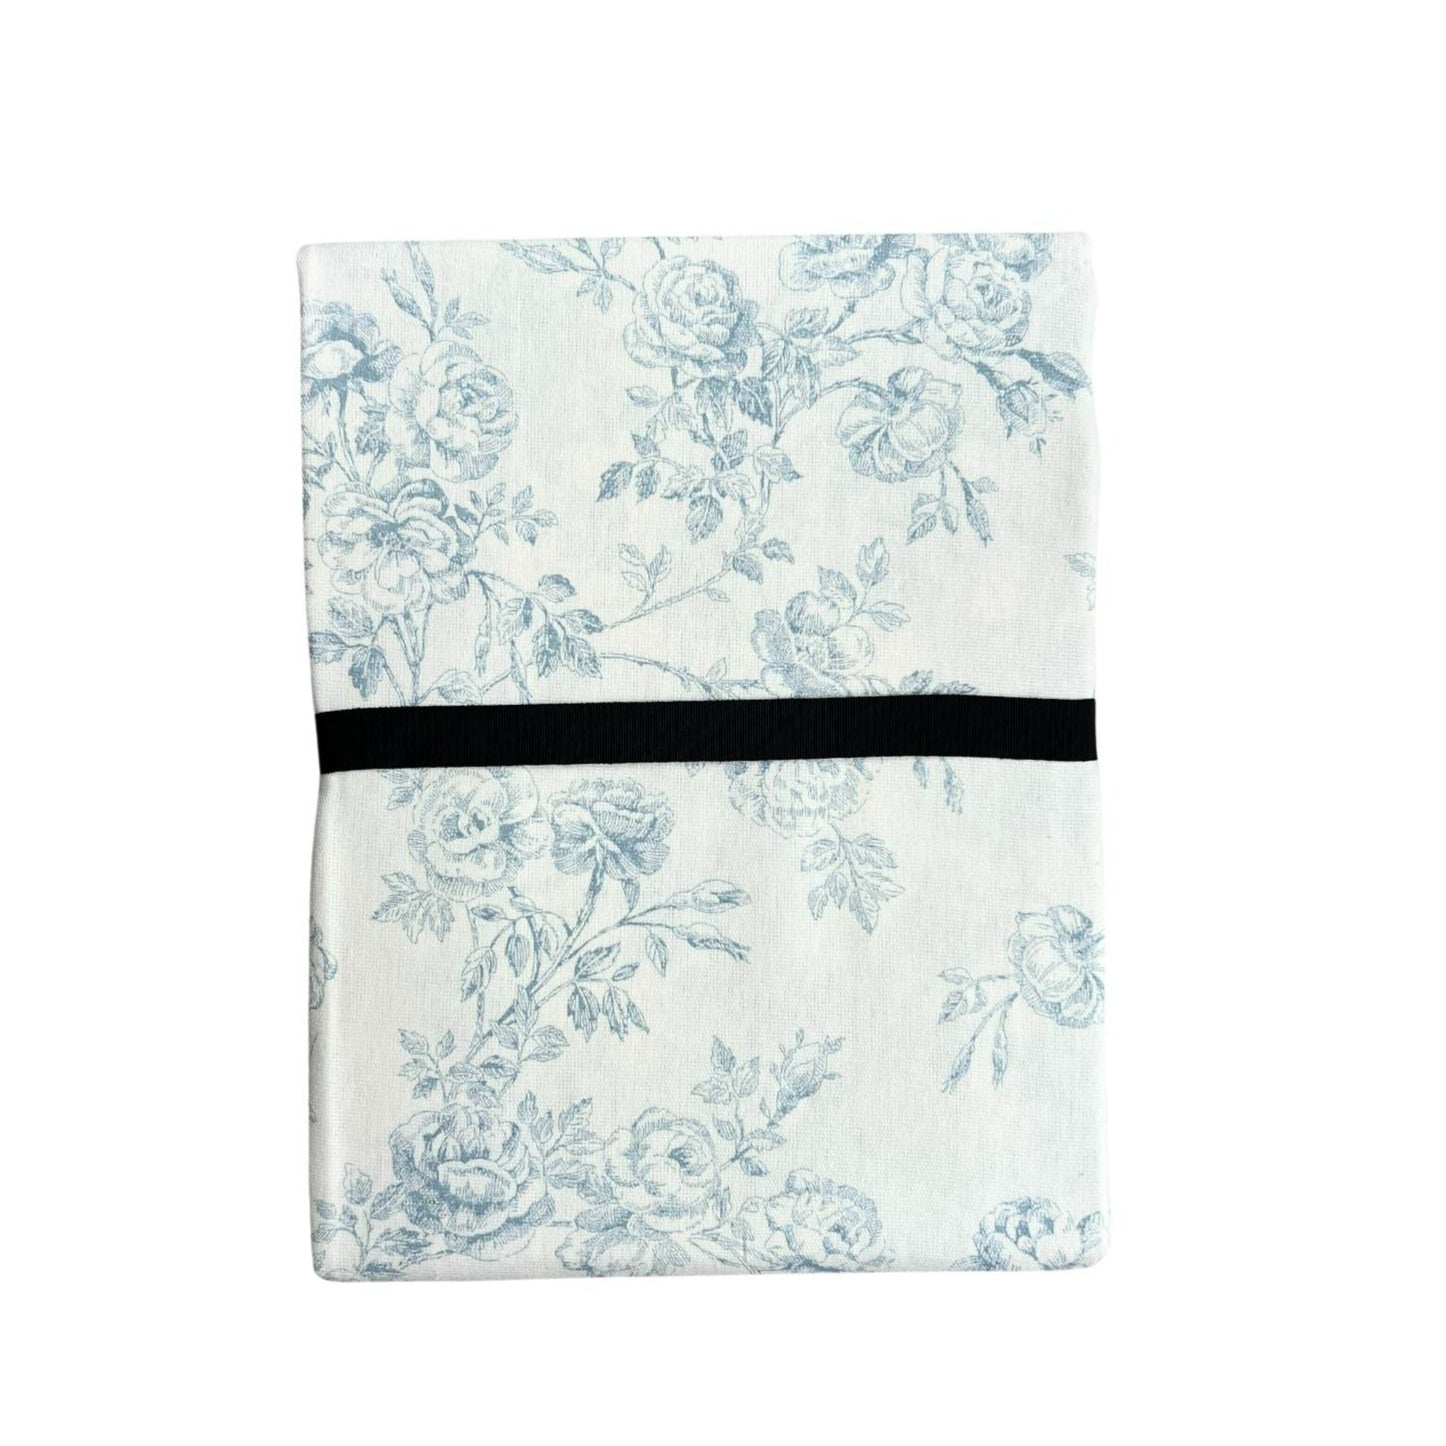 Blue floral tablecloth